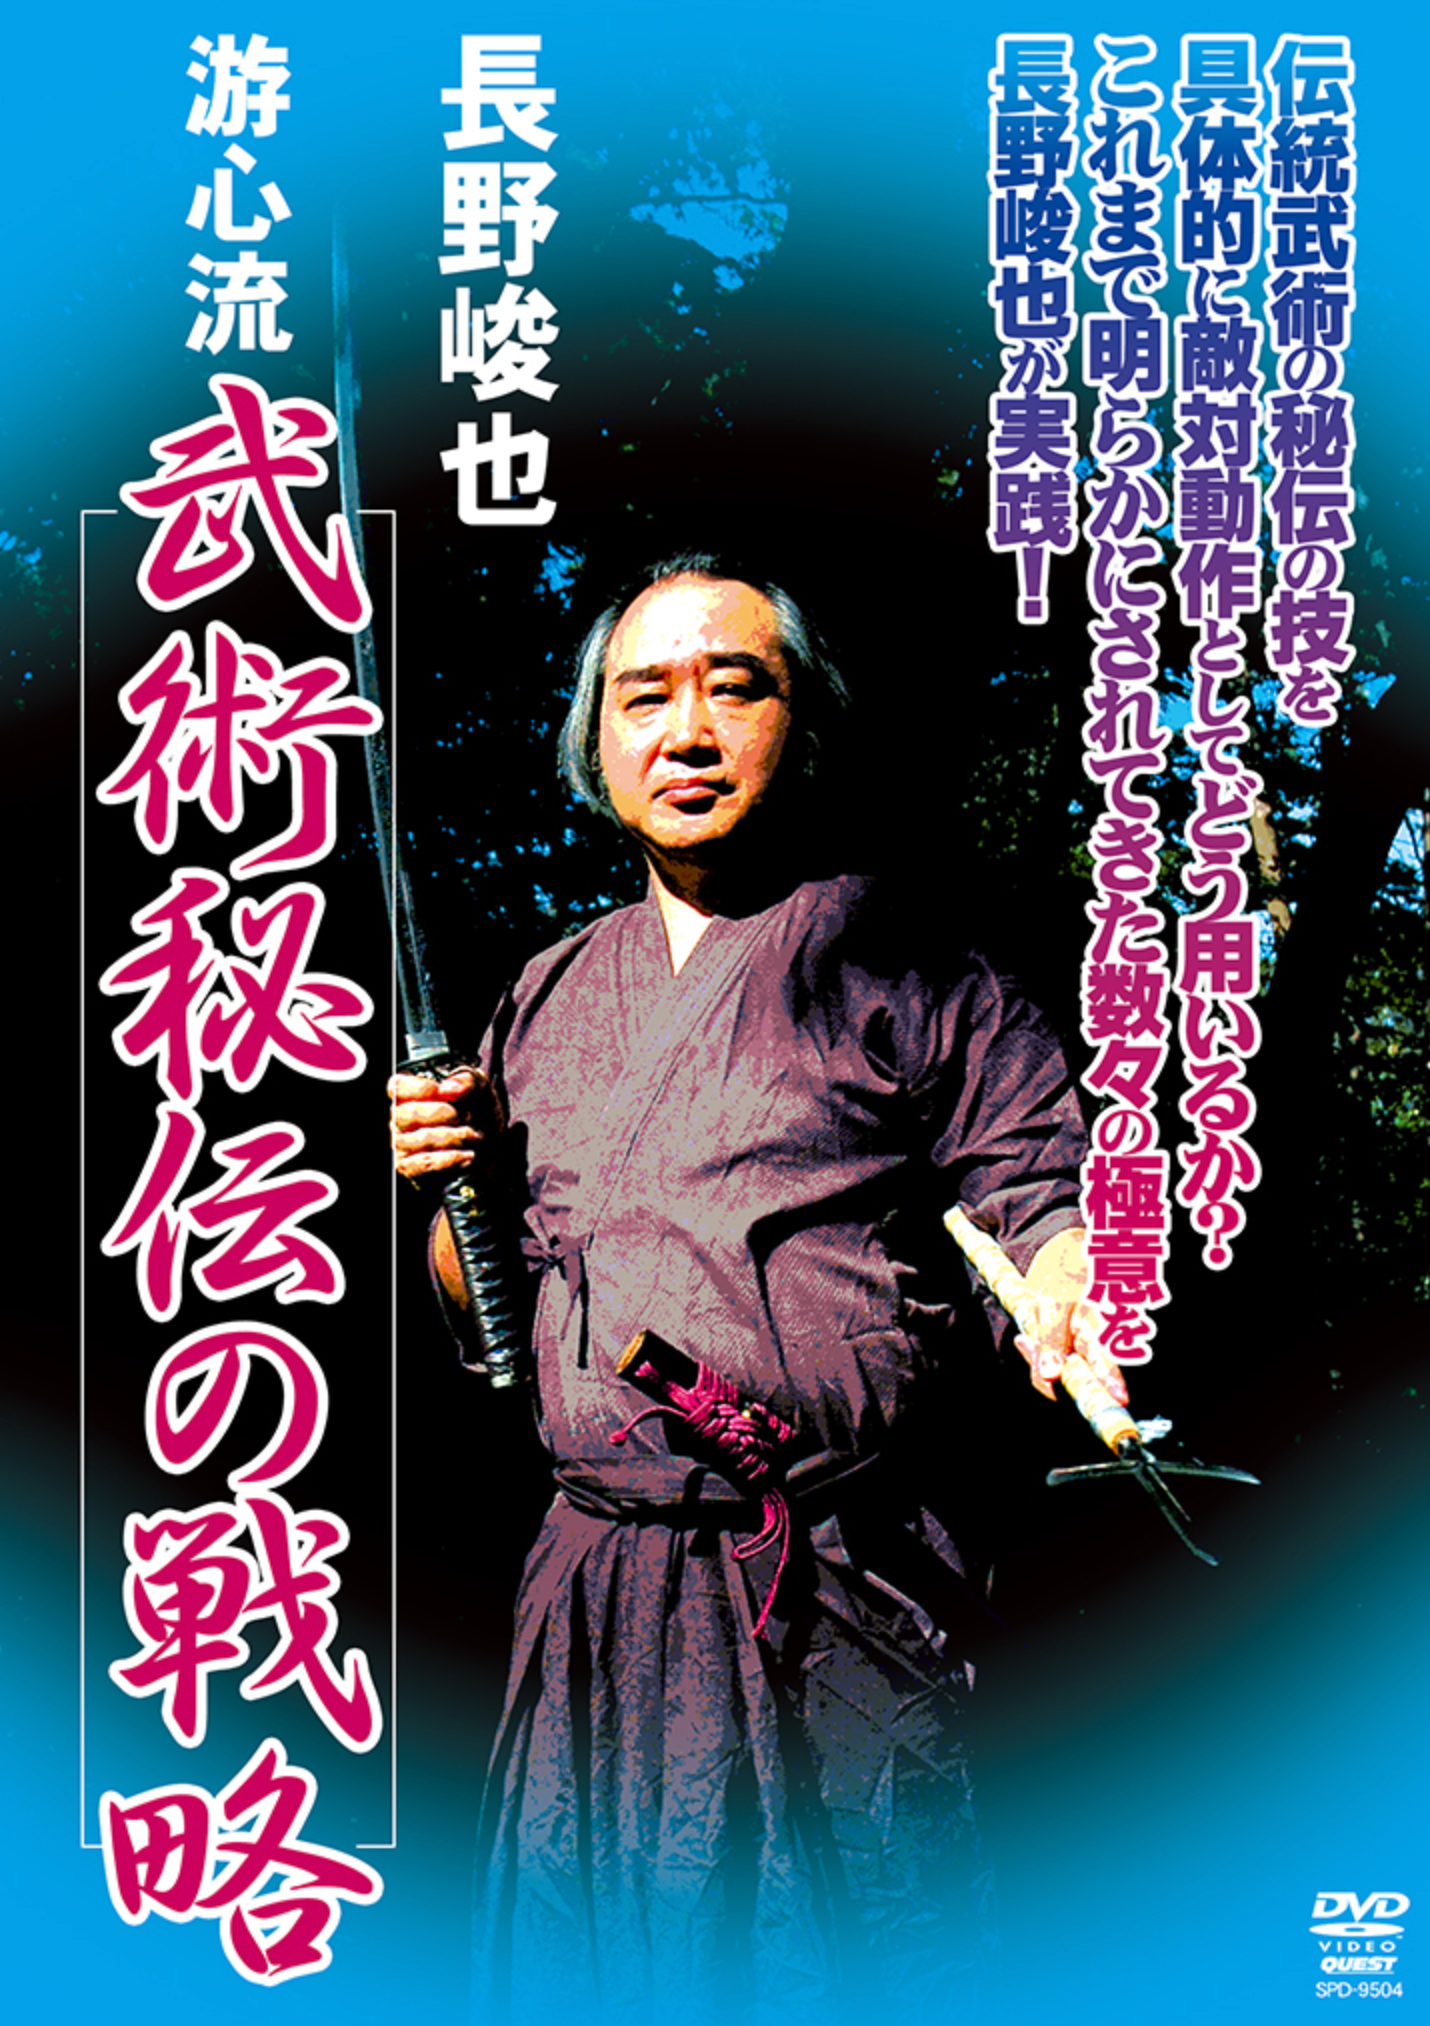 Yushin Ryu Bujutsu Secret Strategy DVD with Shunya Nagano - Budovideos Inc